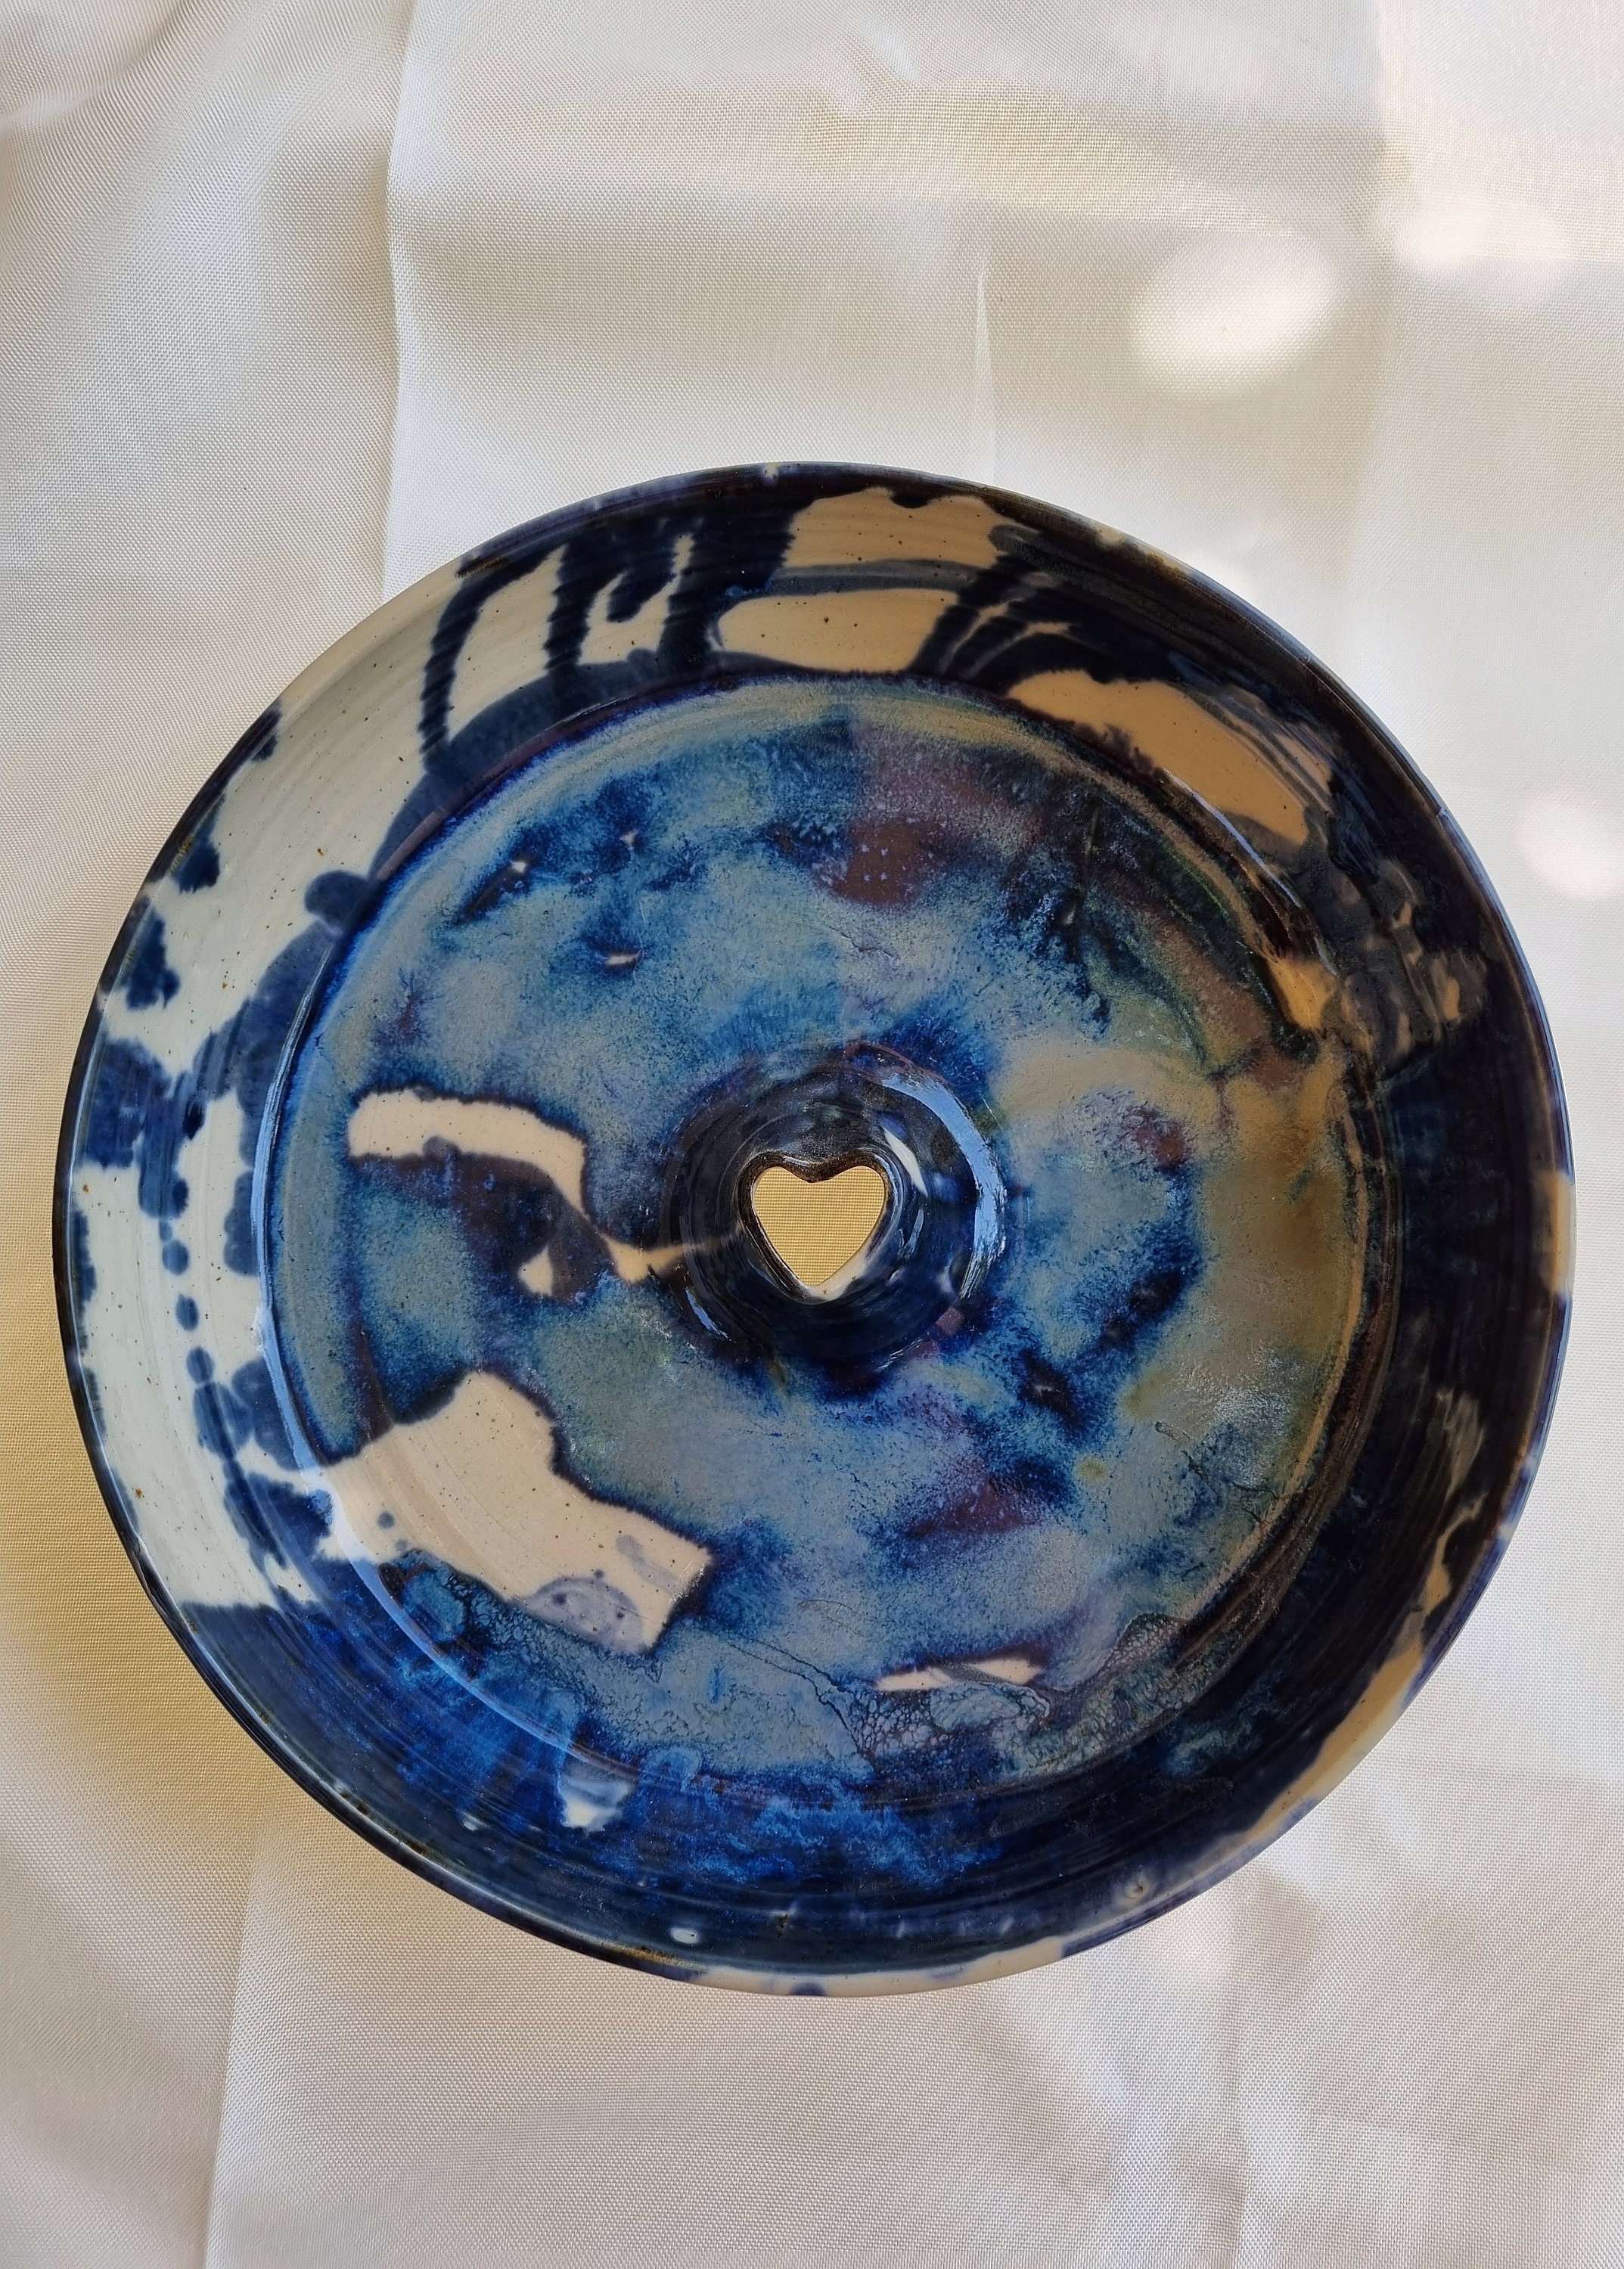 Blue Ceramic Bundt Pan And/or Cake Dish 